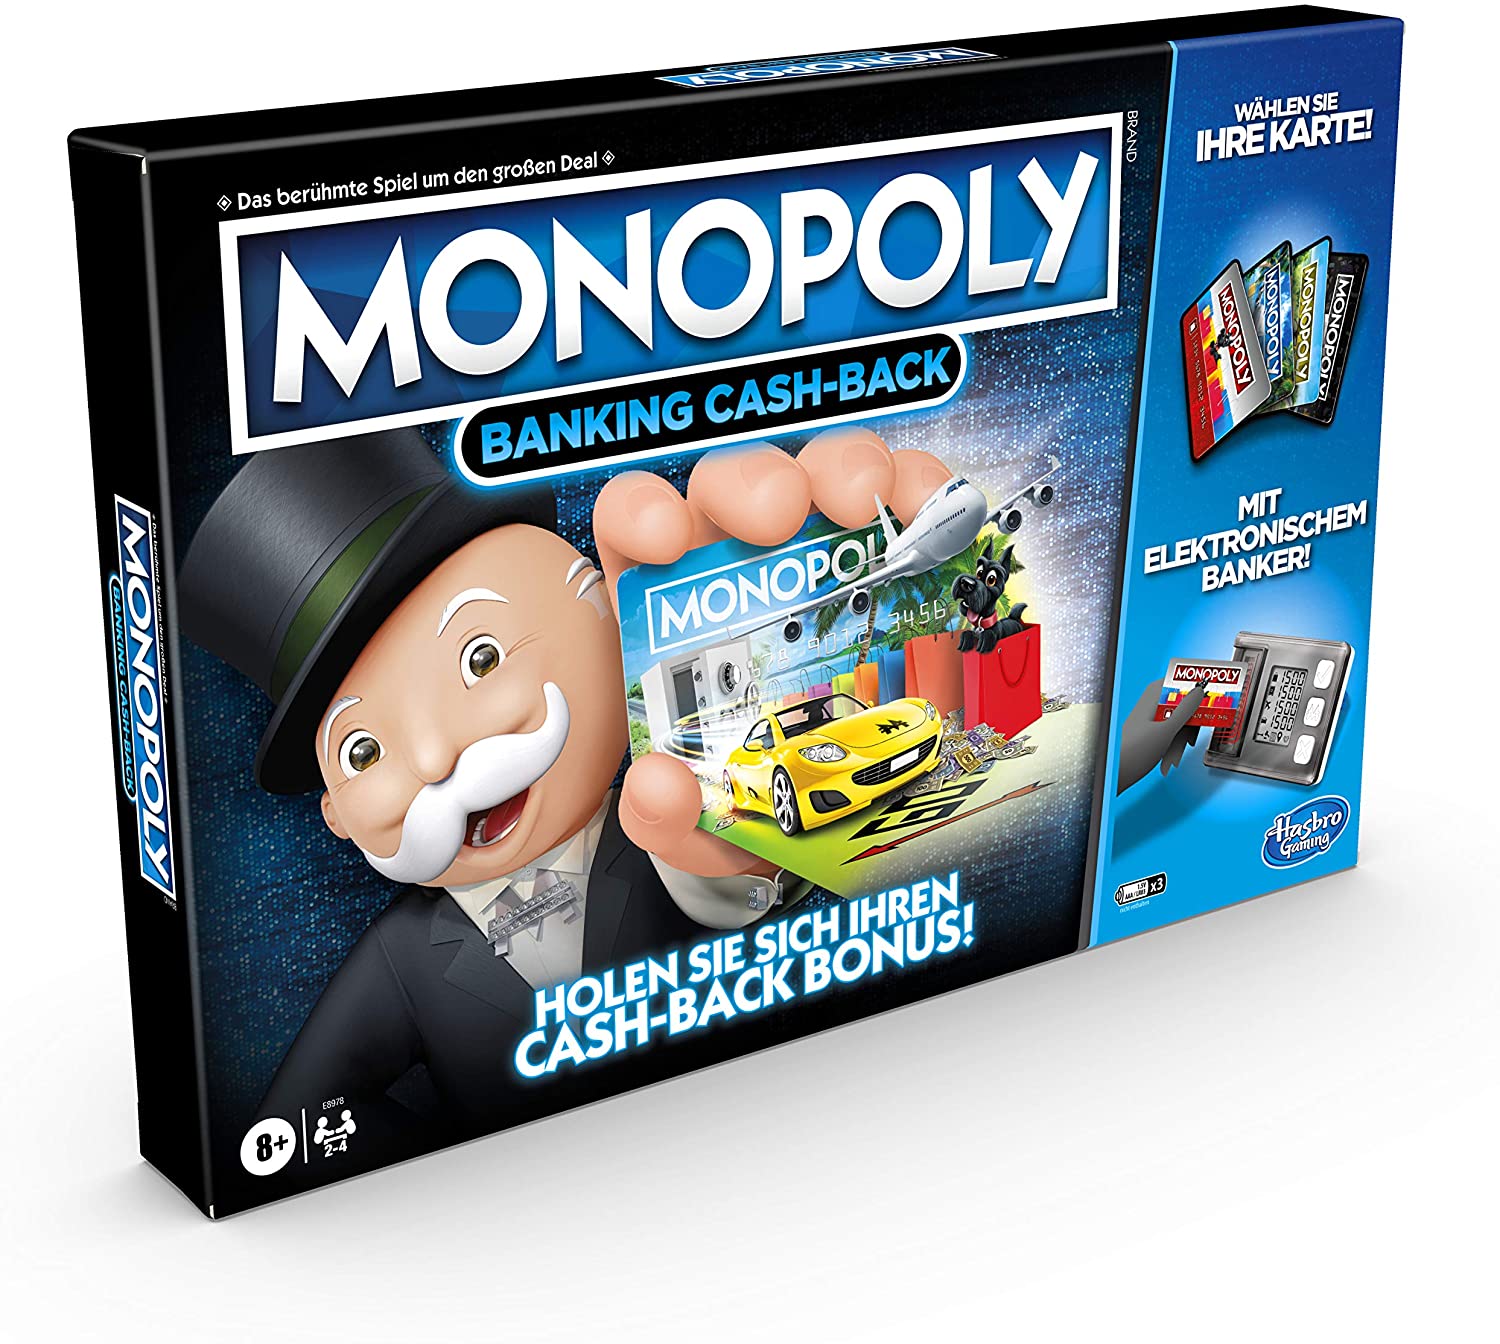 Monopoly Banking Cash-Back Brettspiel, Kartenleser Cash-Back Bonus bargeldloses